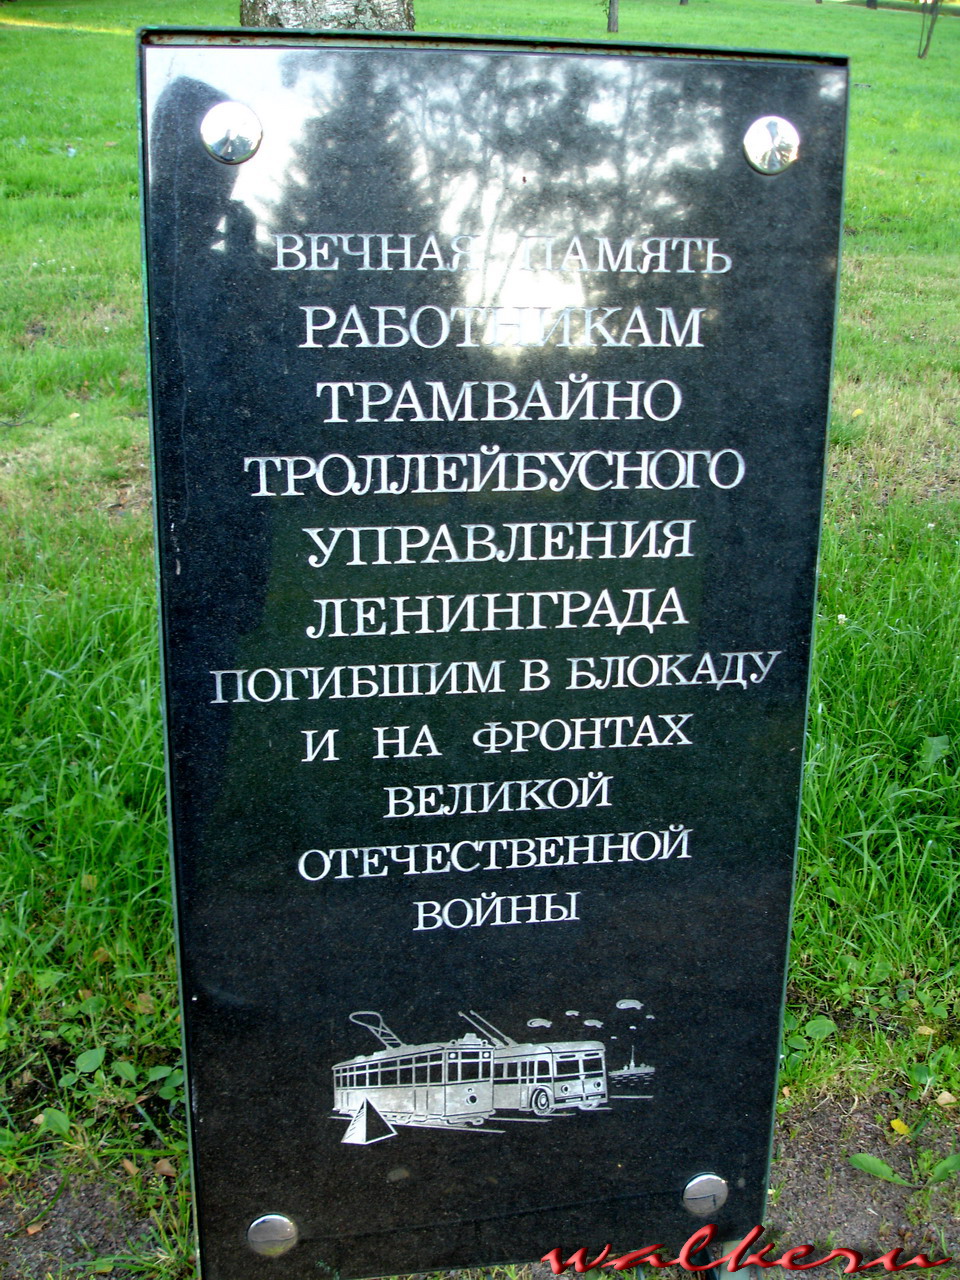 Пискарёвское кладбище